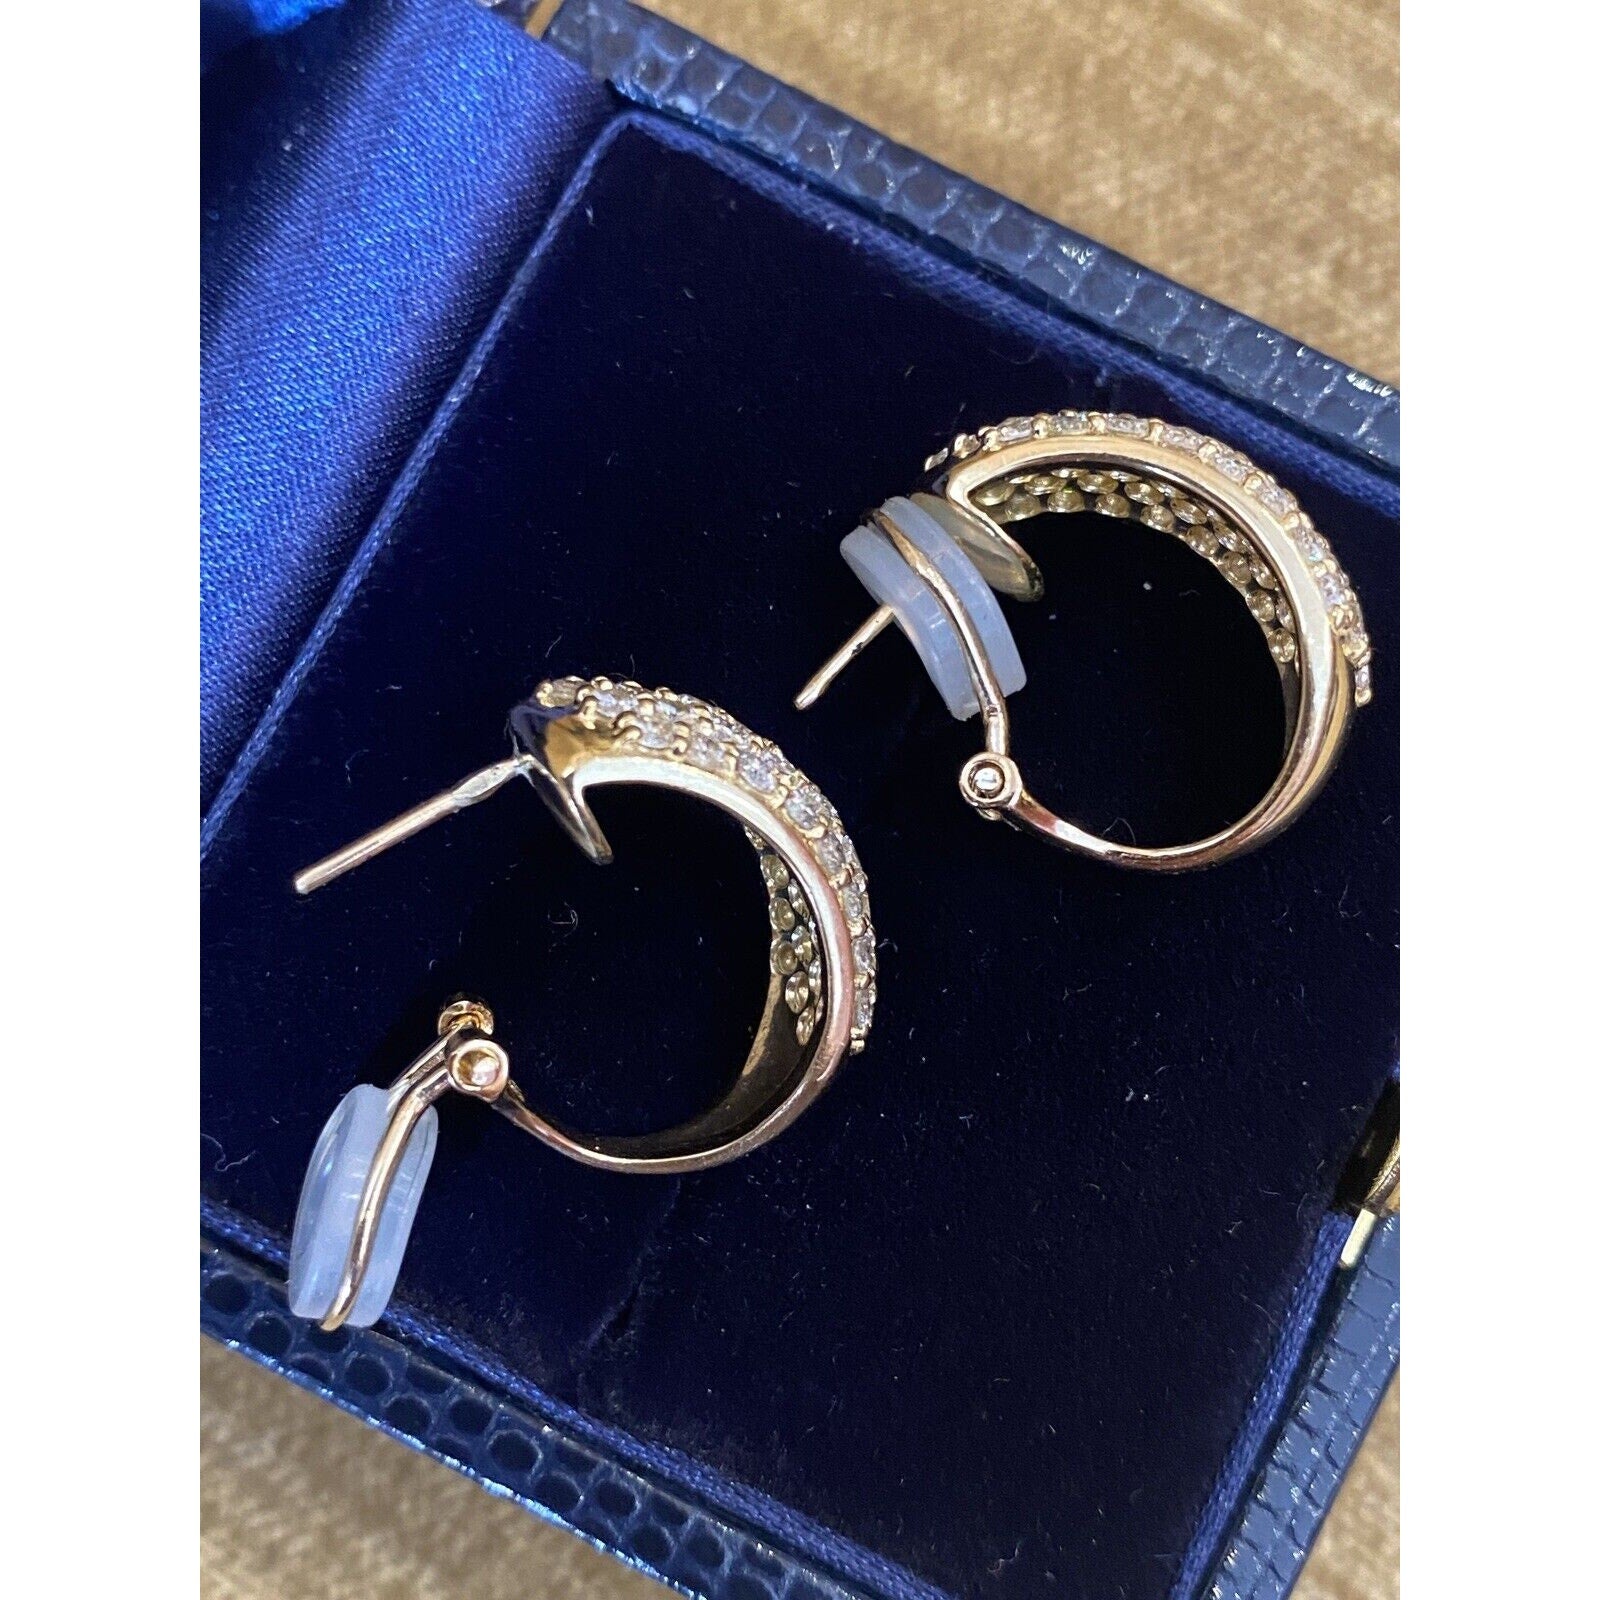 5 Row Pave Diamond Half Hoop Earrings 2.74 cttw in 18k Yellow Gold - HM2368SE